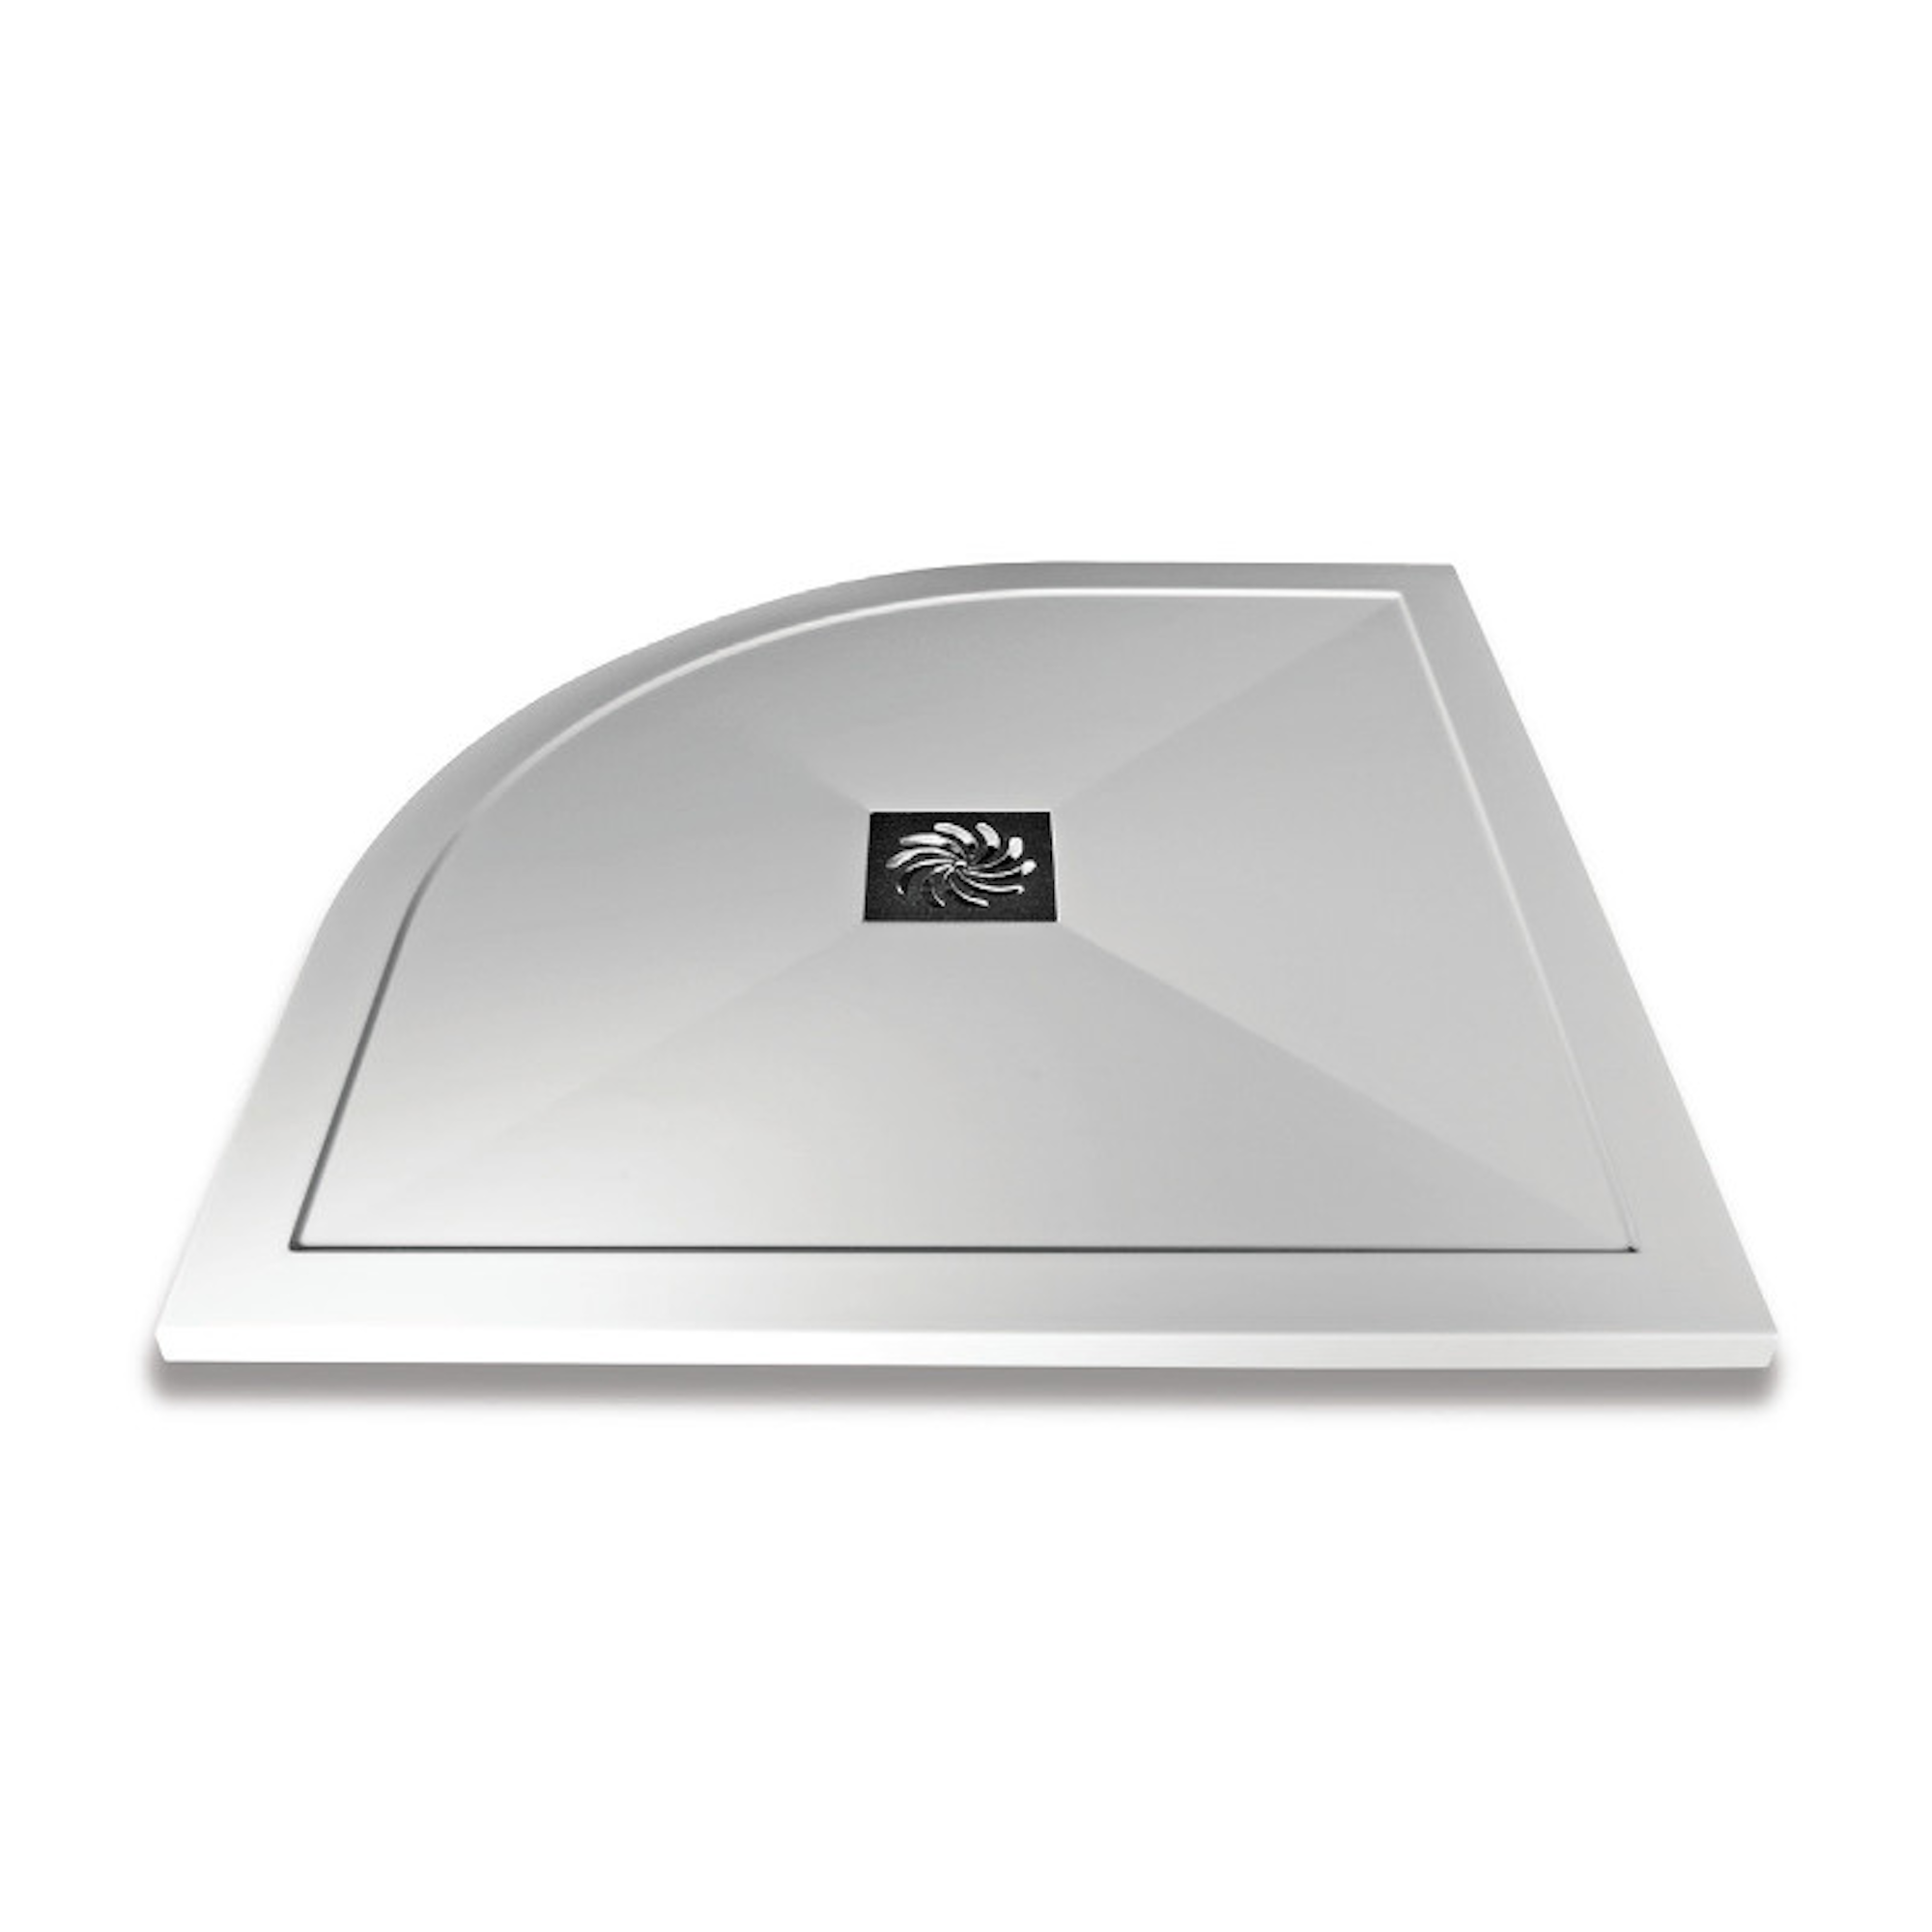 H25 900x900mm quadrant shower tray